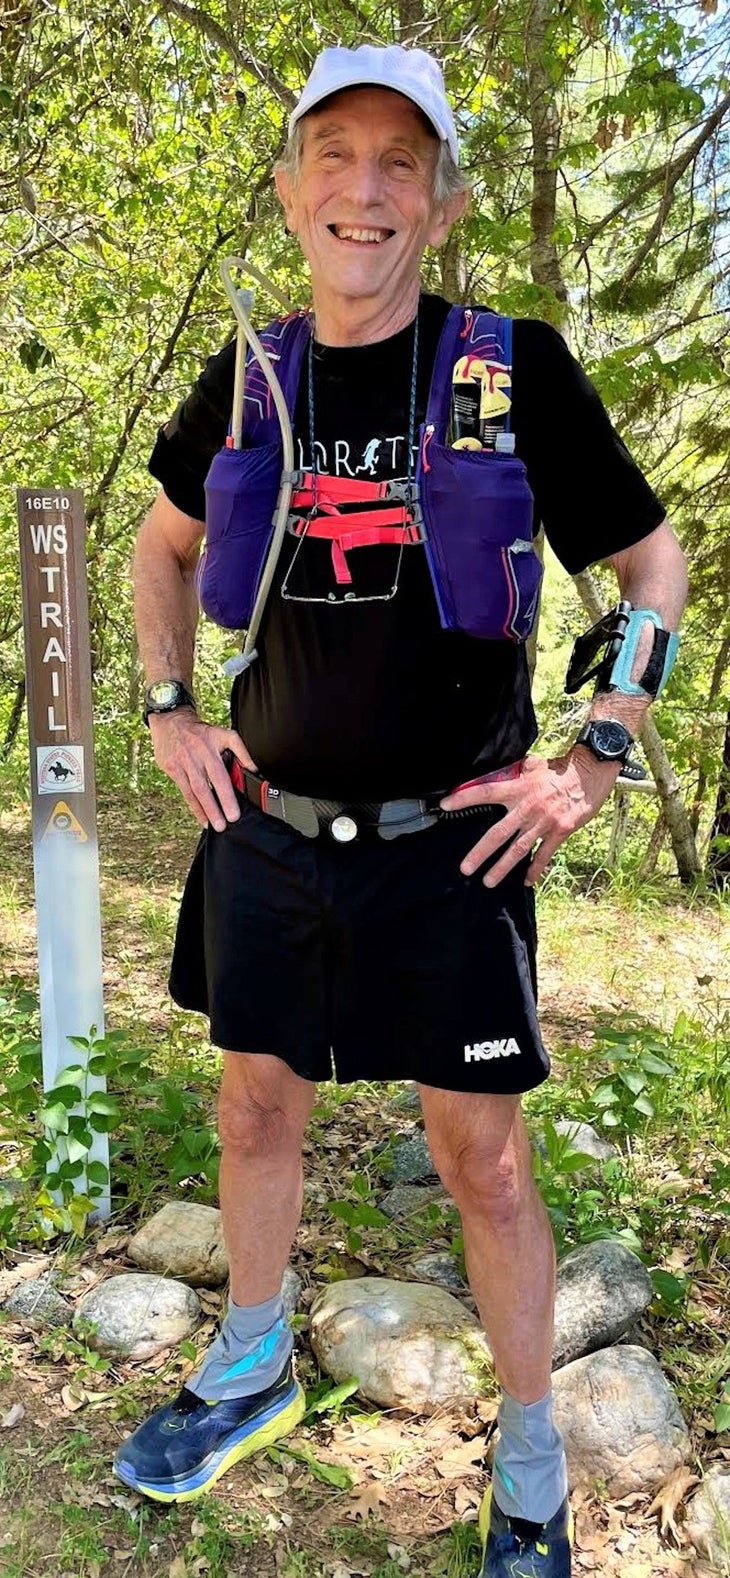 Older looking ultra runner on a trail posing. Full figure shot. 